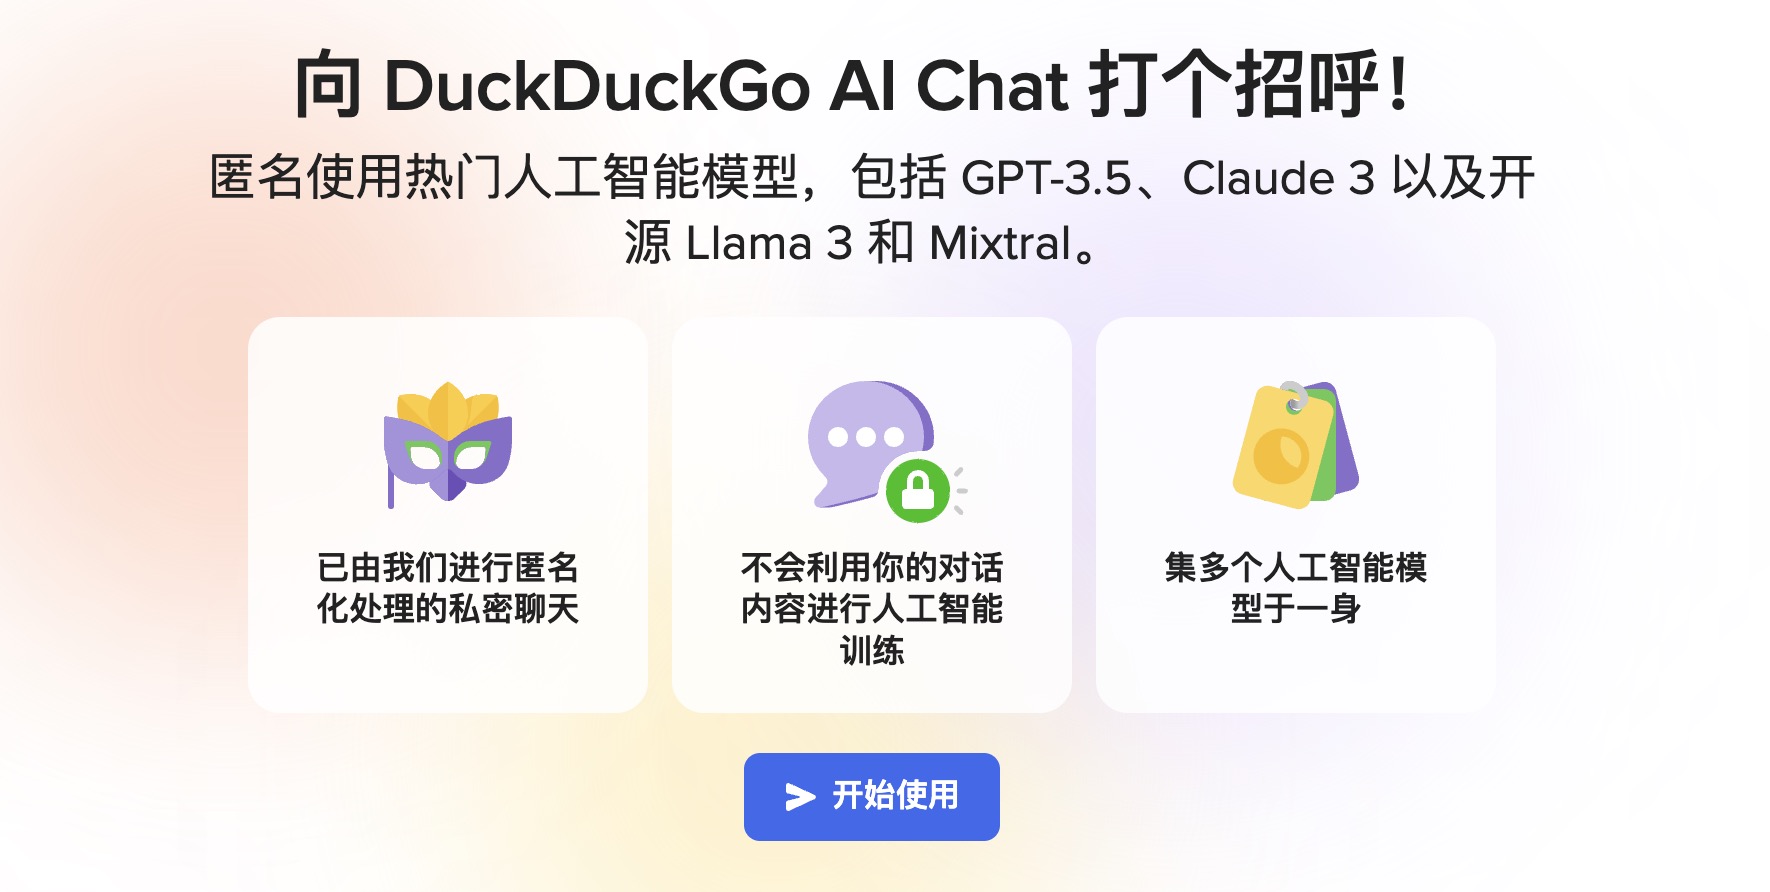 “DuckDuckGo推出隐私保护型AI聊天机器人：不可追踪，数据安全，支持GPT-3.5 Turbo与Claude 3”